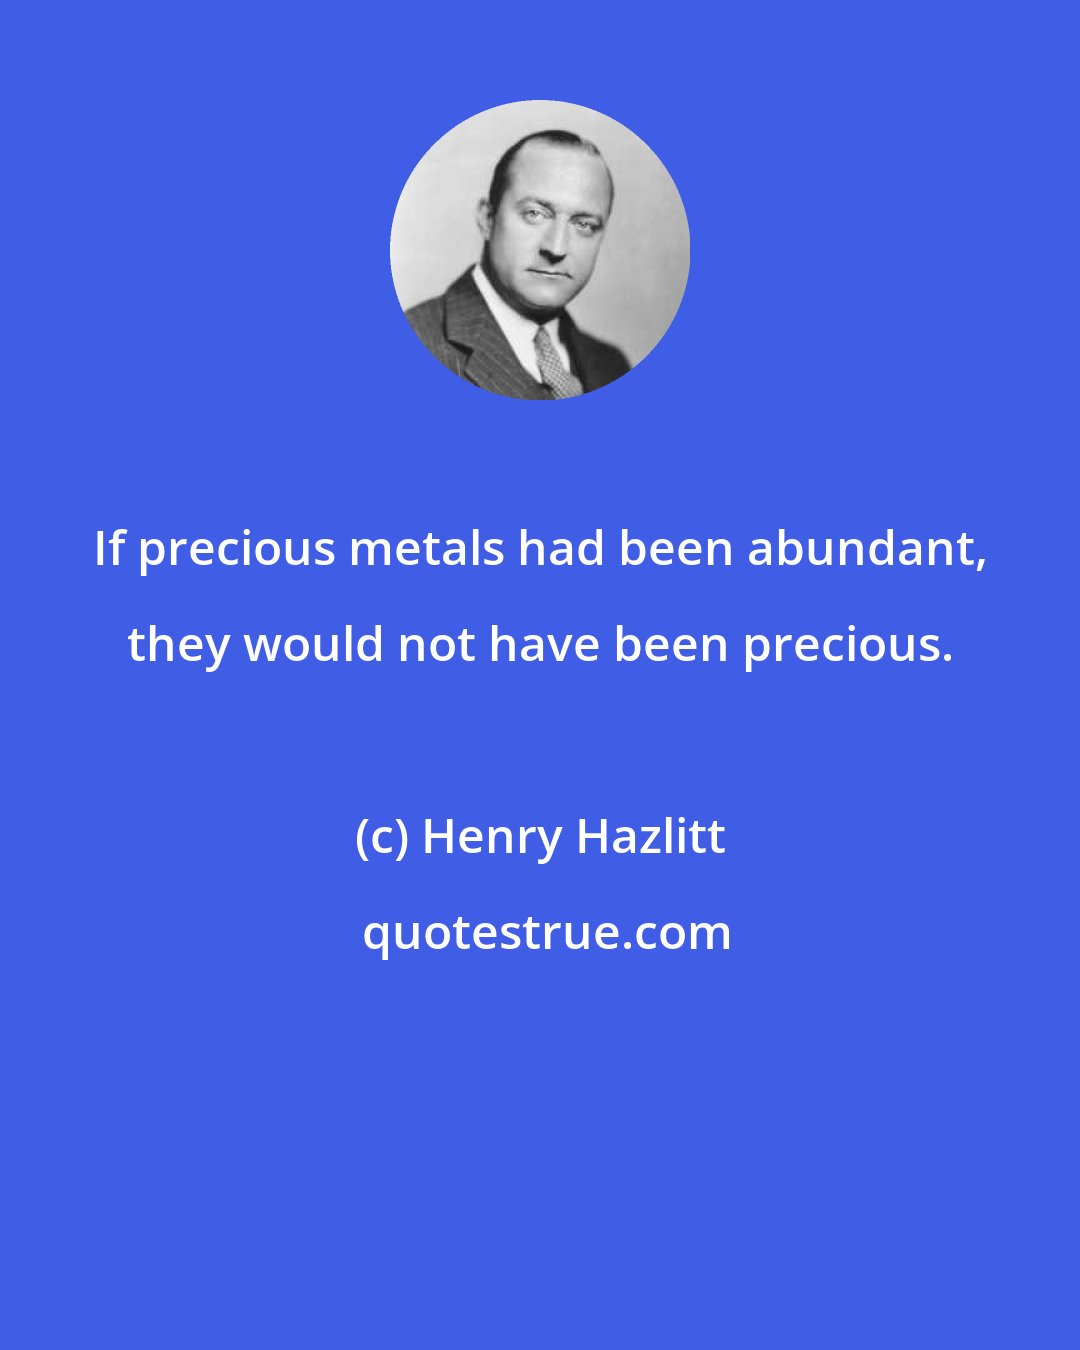 Henry Hazlitt: If precious metals had been abundant, they would not have been precious.